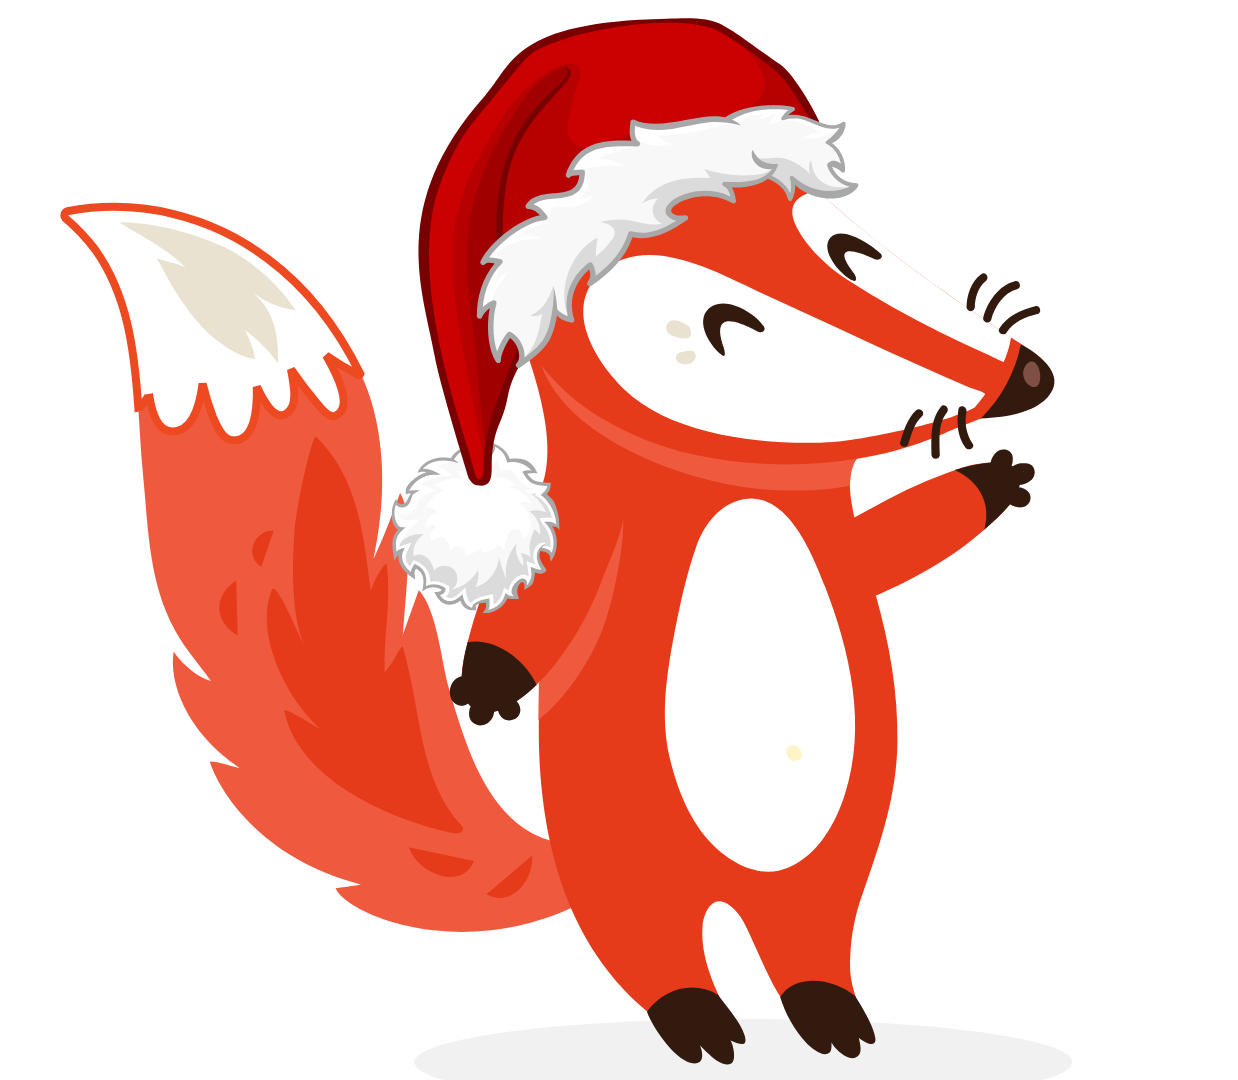 holiday fox - thank major donors with storytelling this holiday season